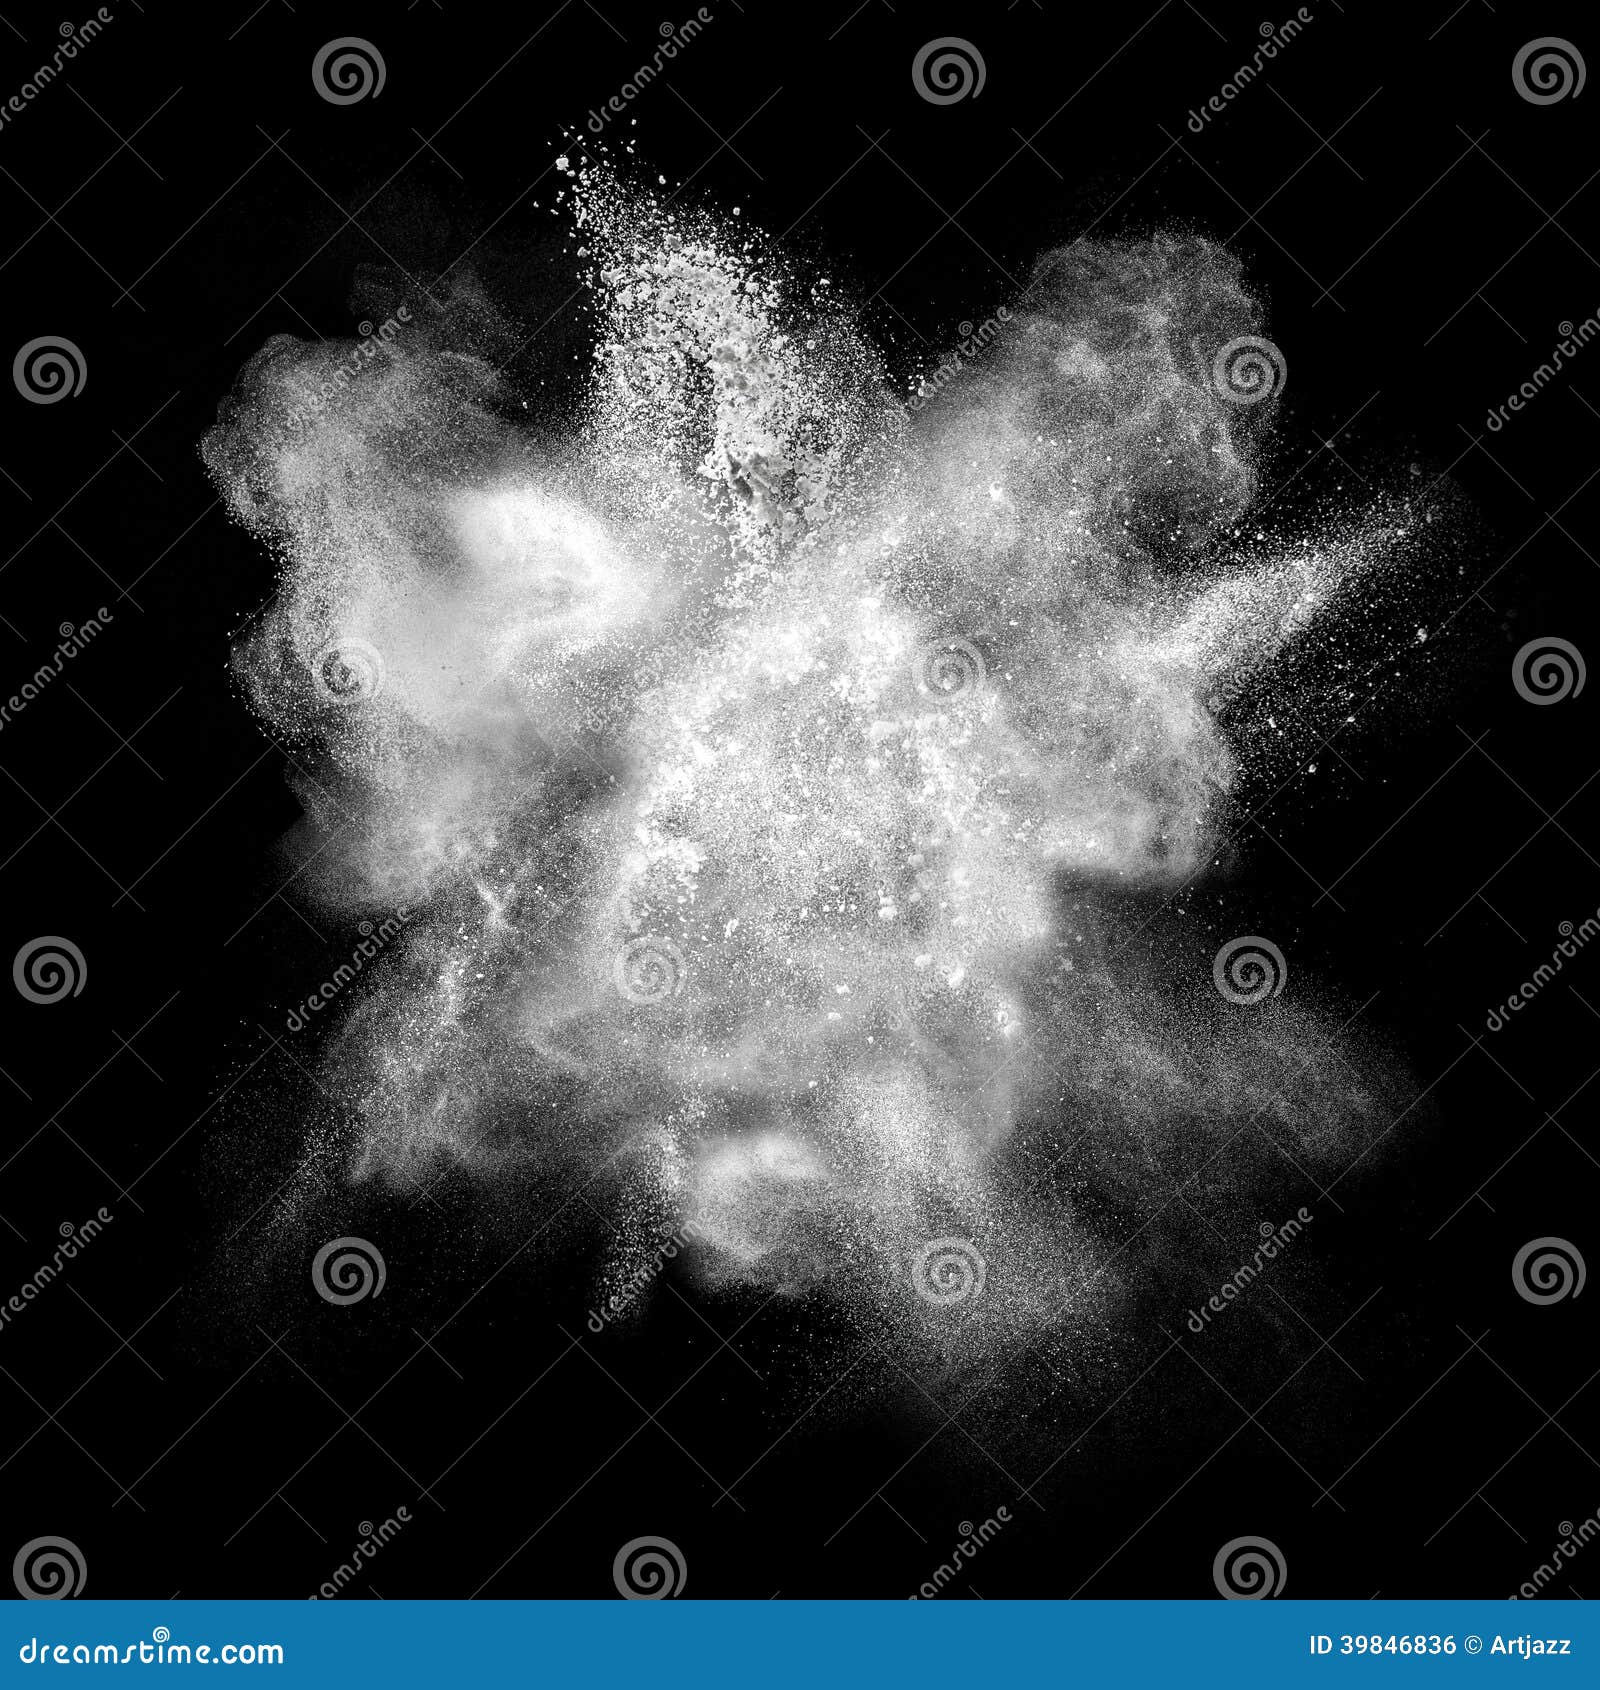 white powder explosion  on black